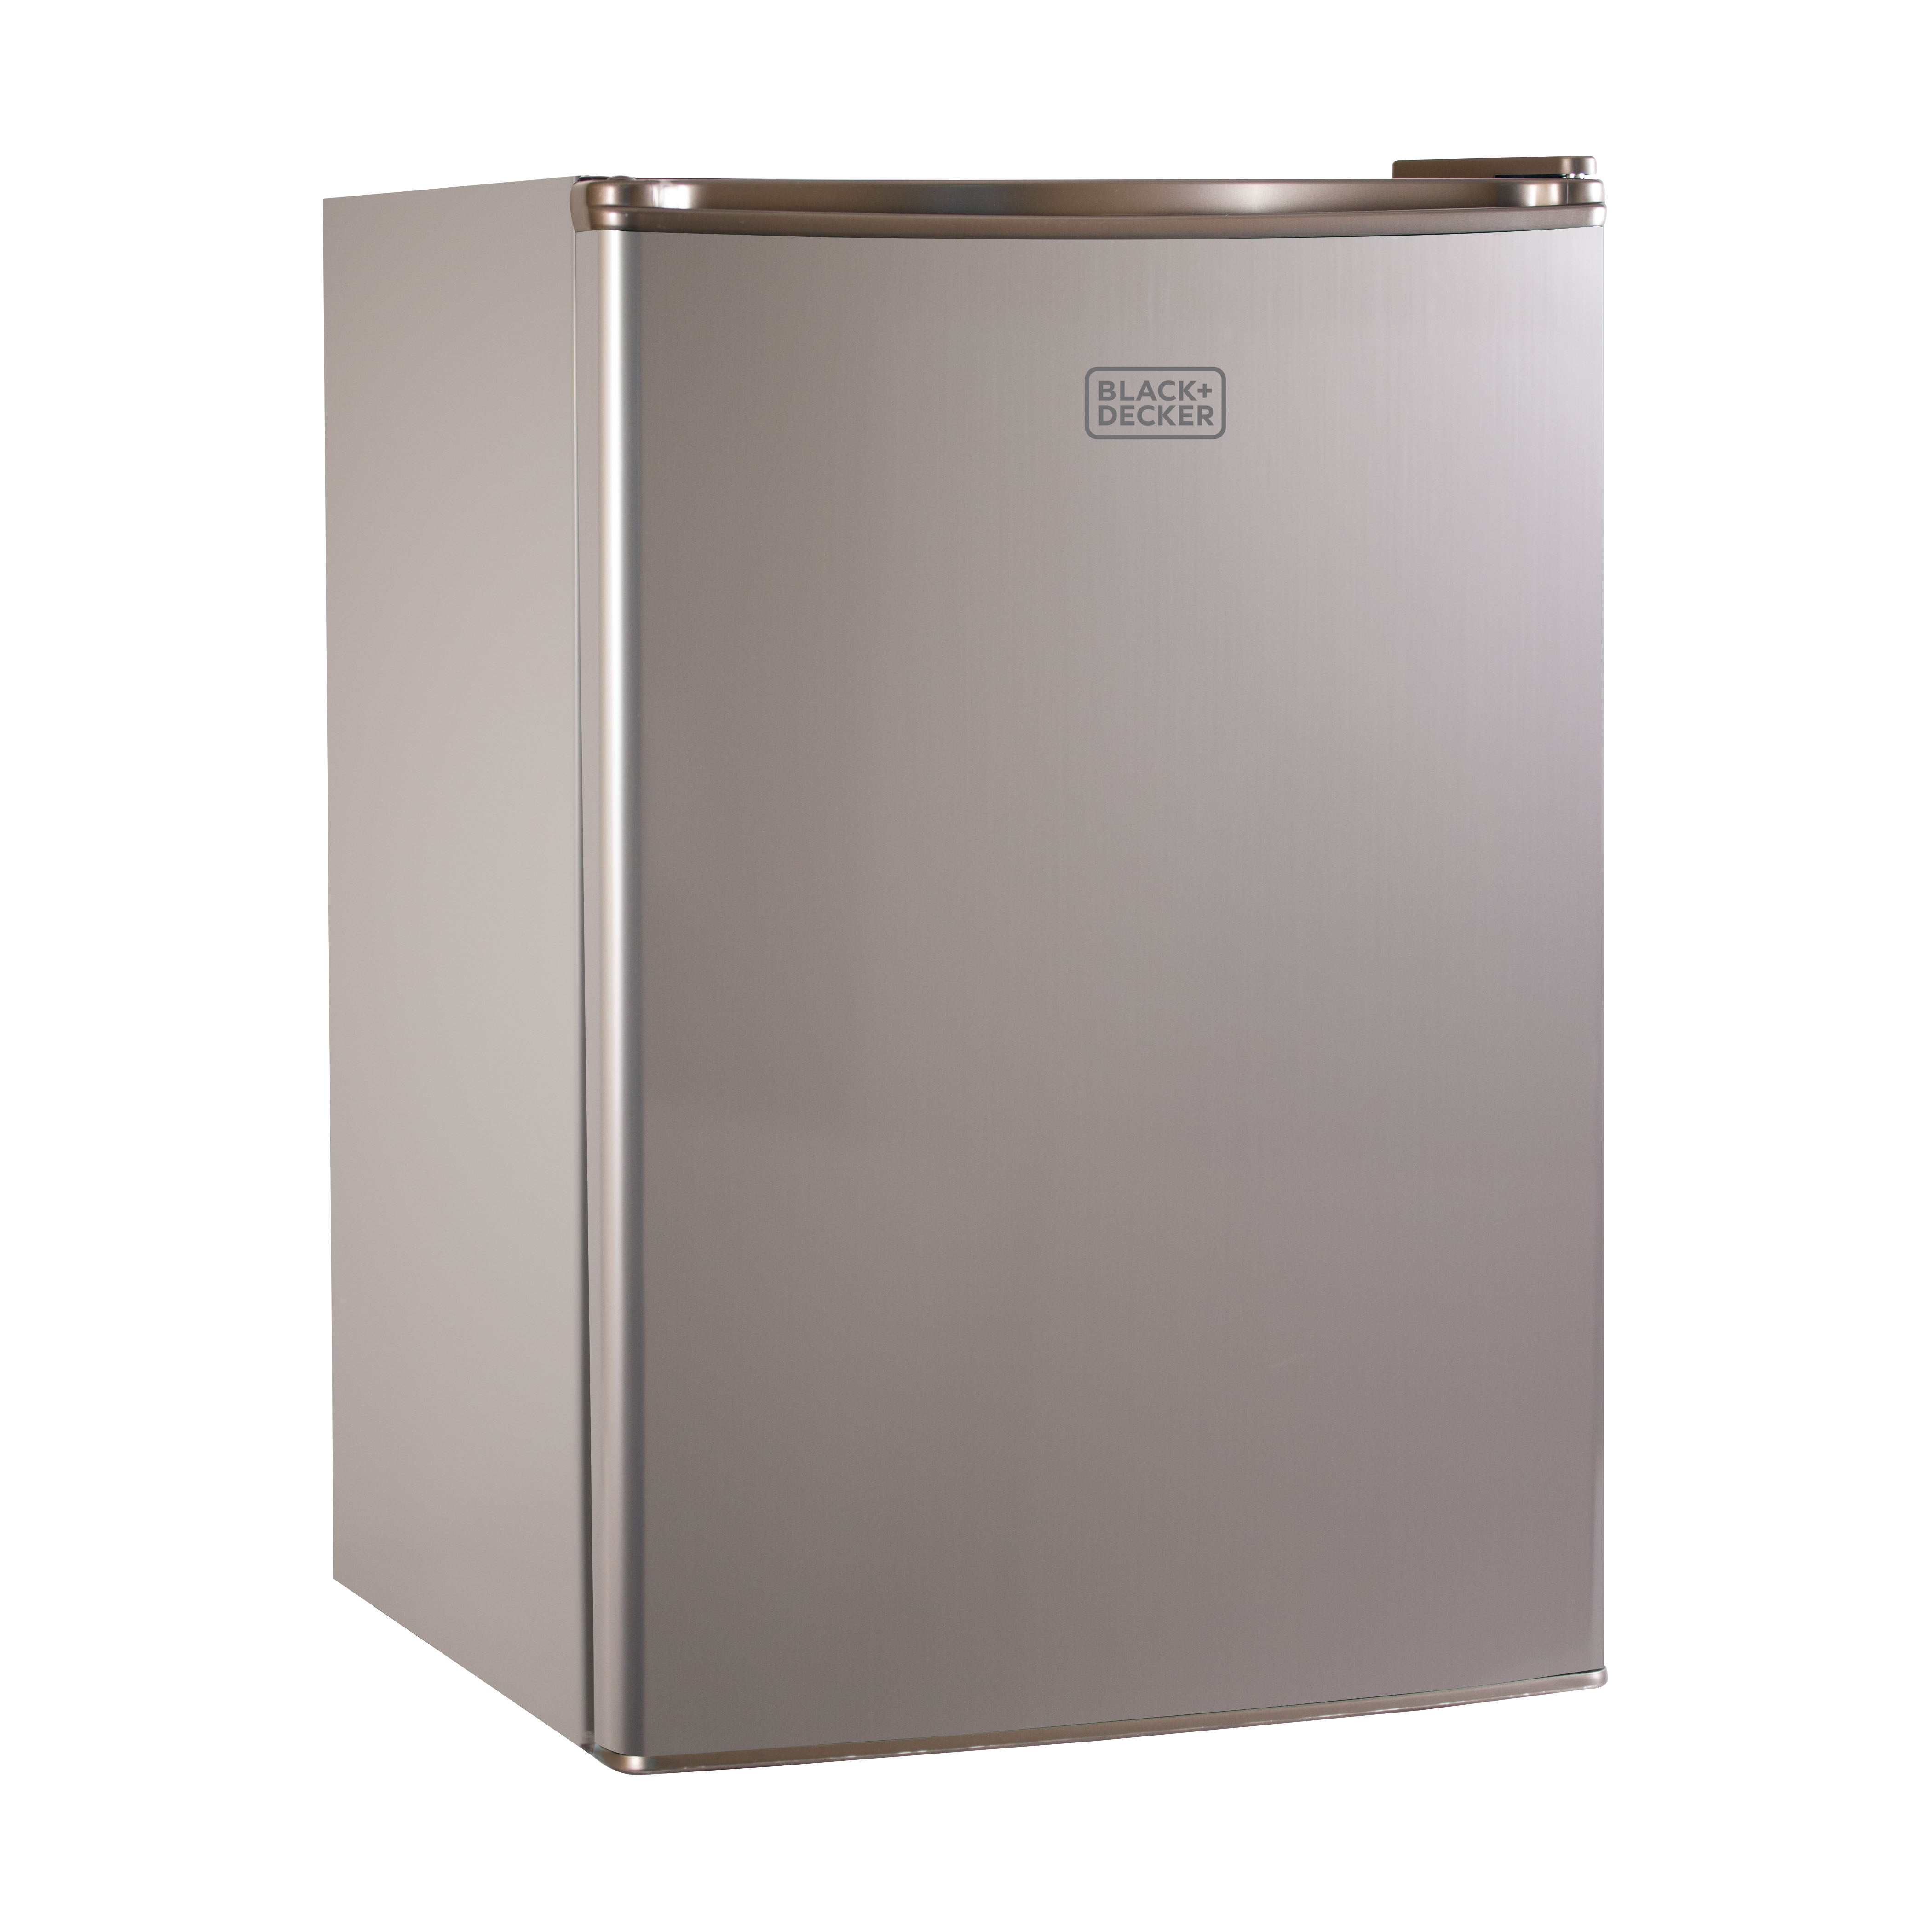 BLACK+DECKER Compact Refrigerator 2.5 Cu. Ft. with Door Storage, Silver